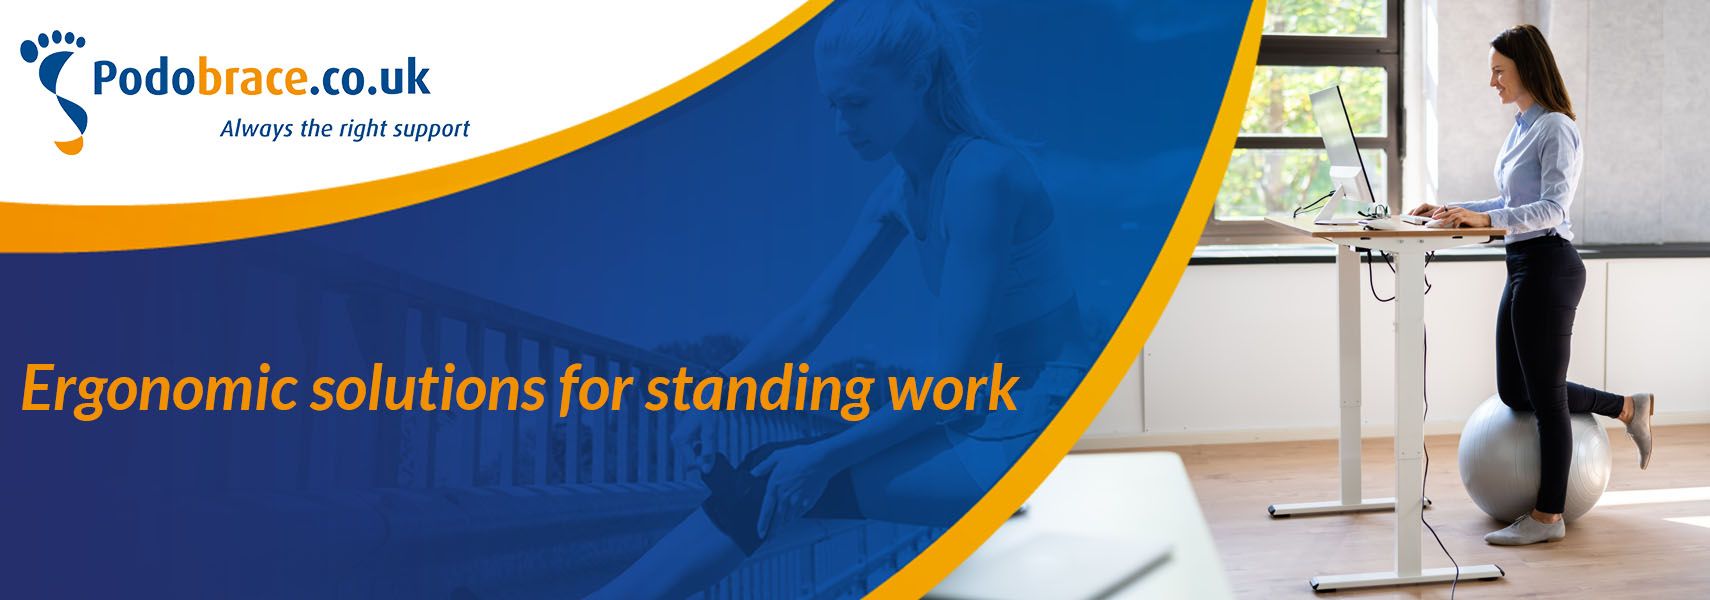 ergonomic solutions for standing work